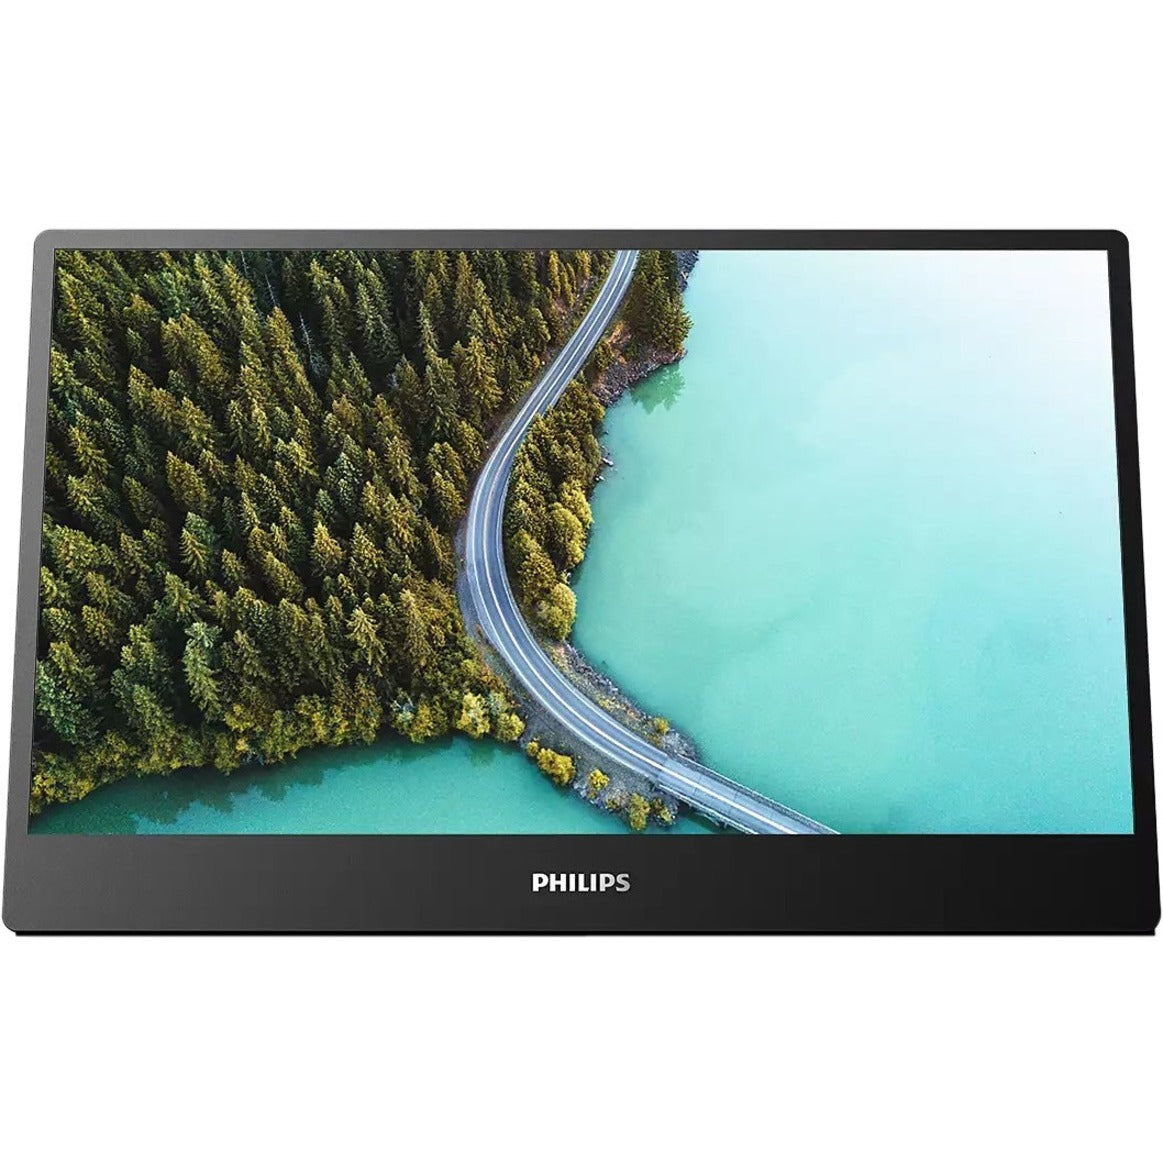 Philips 16B1P3300 15.6" Full HD LCD Monitor - 16:9 - Black